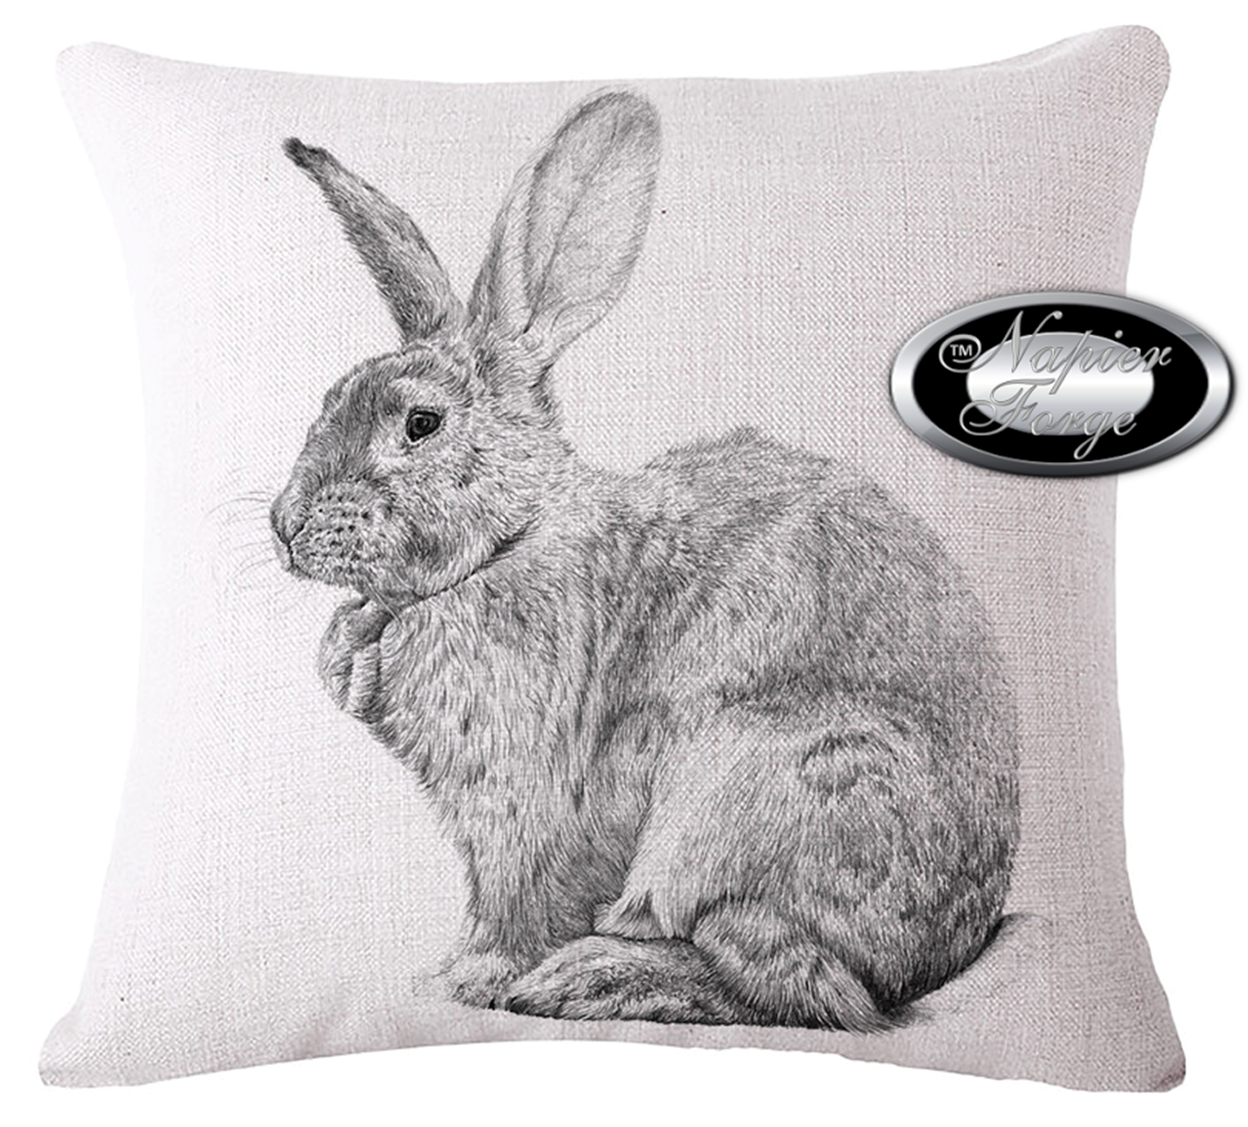 Farmhouse Cotton Linen Blend Cushion Cover 45cm x 45cm - Design Artists Rabbit *Free Shipping